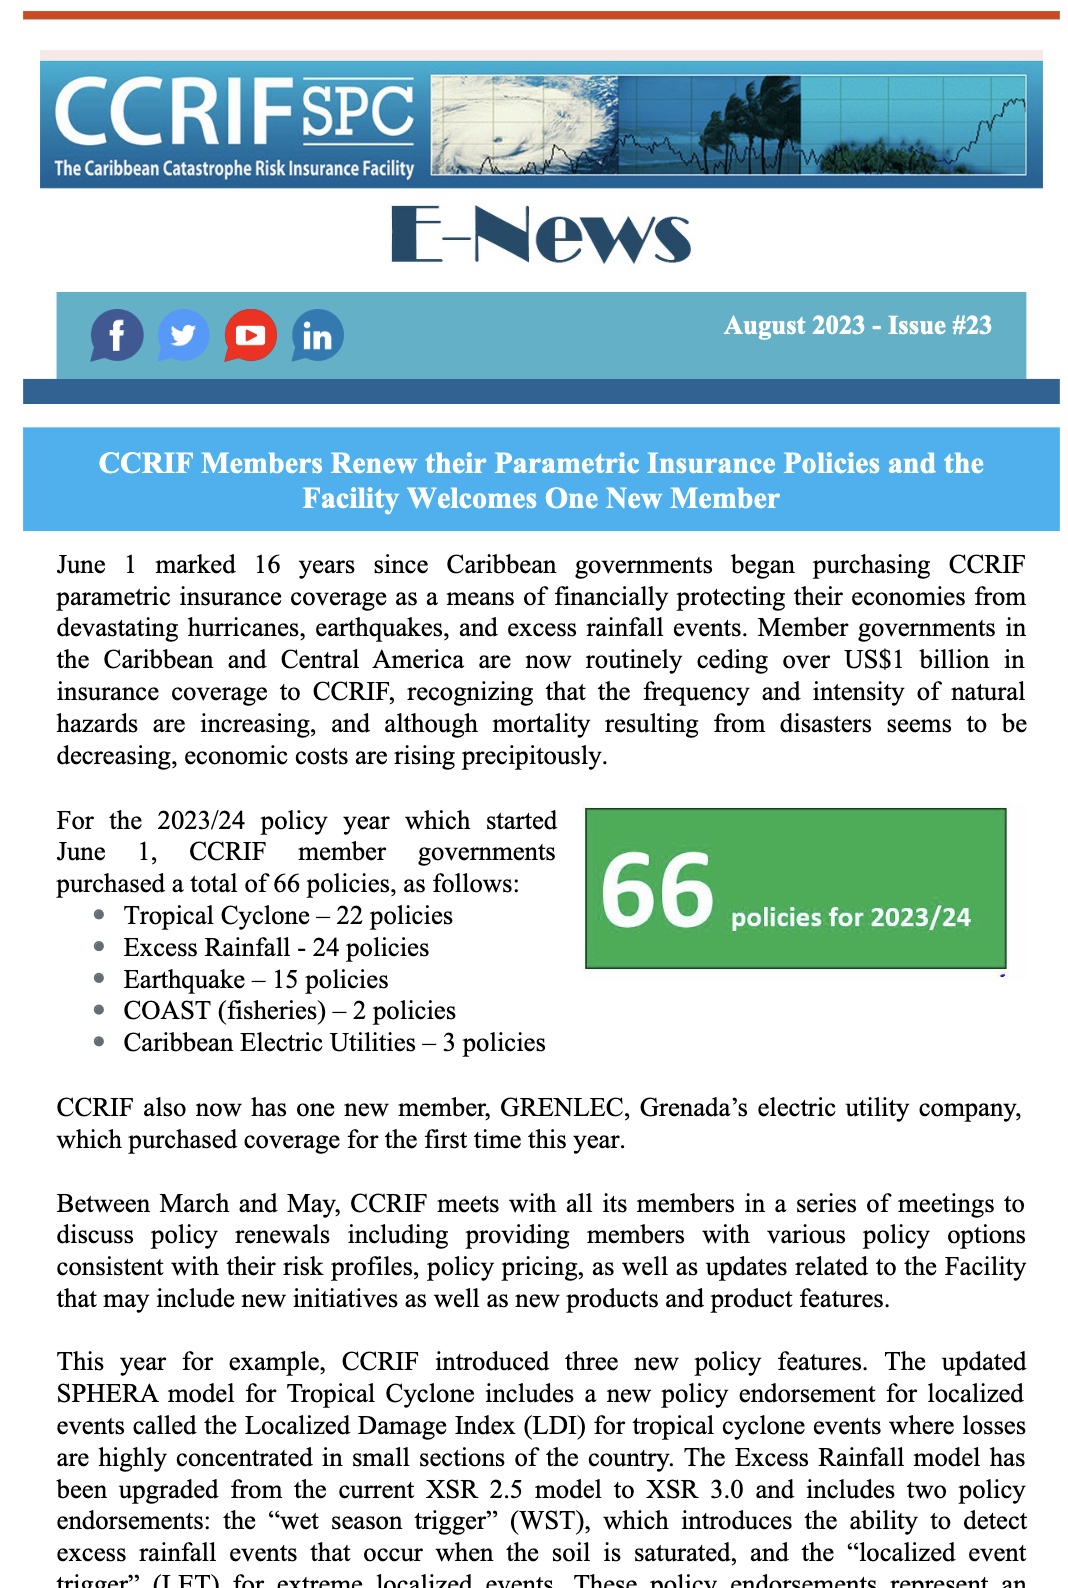 CCRIF SPC E-News - August 2023